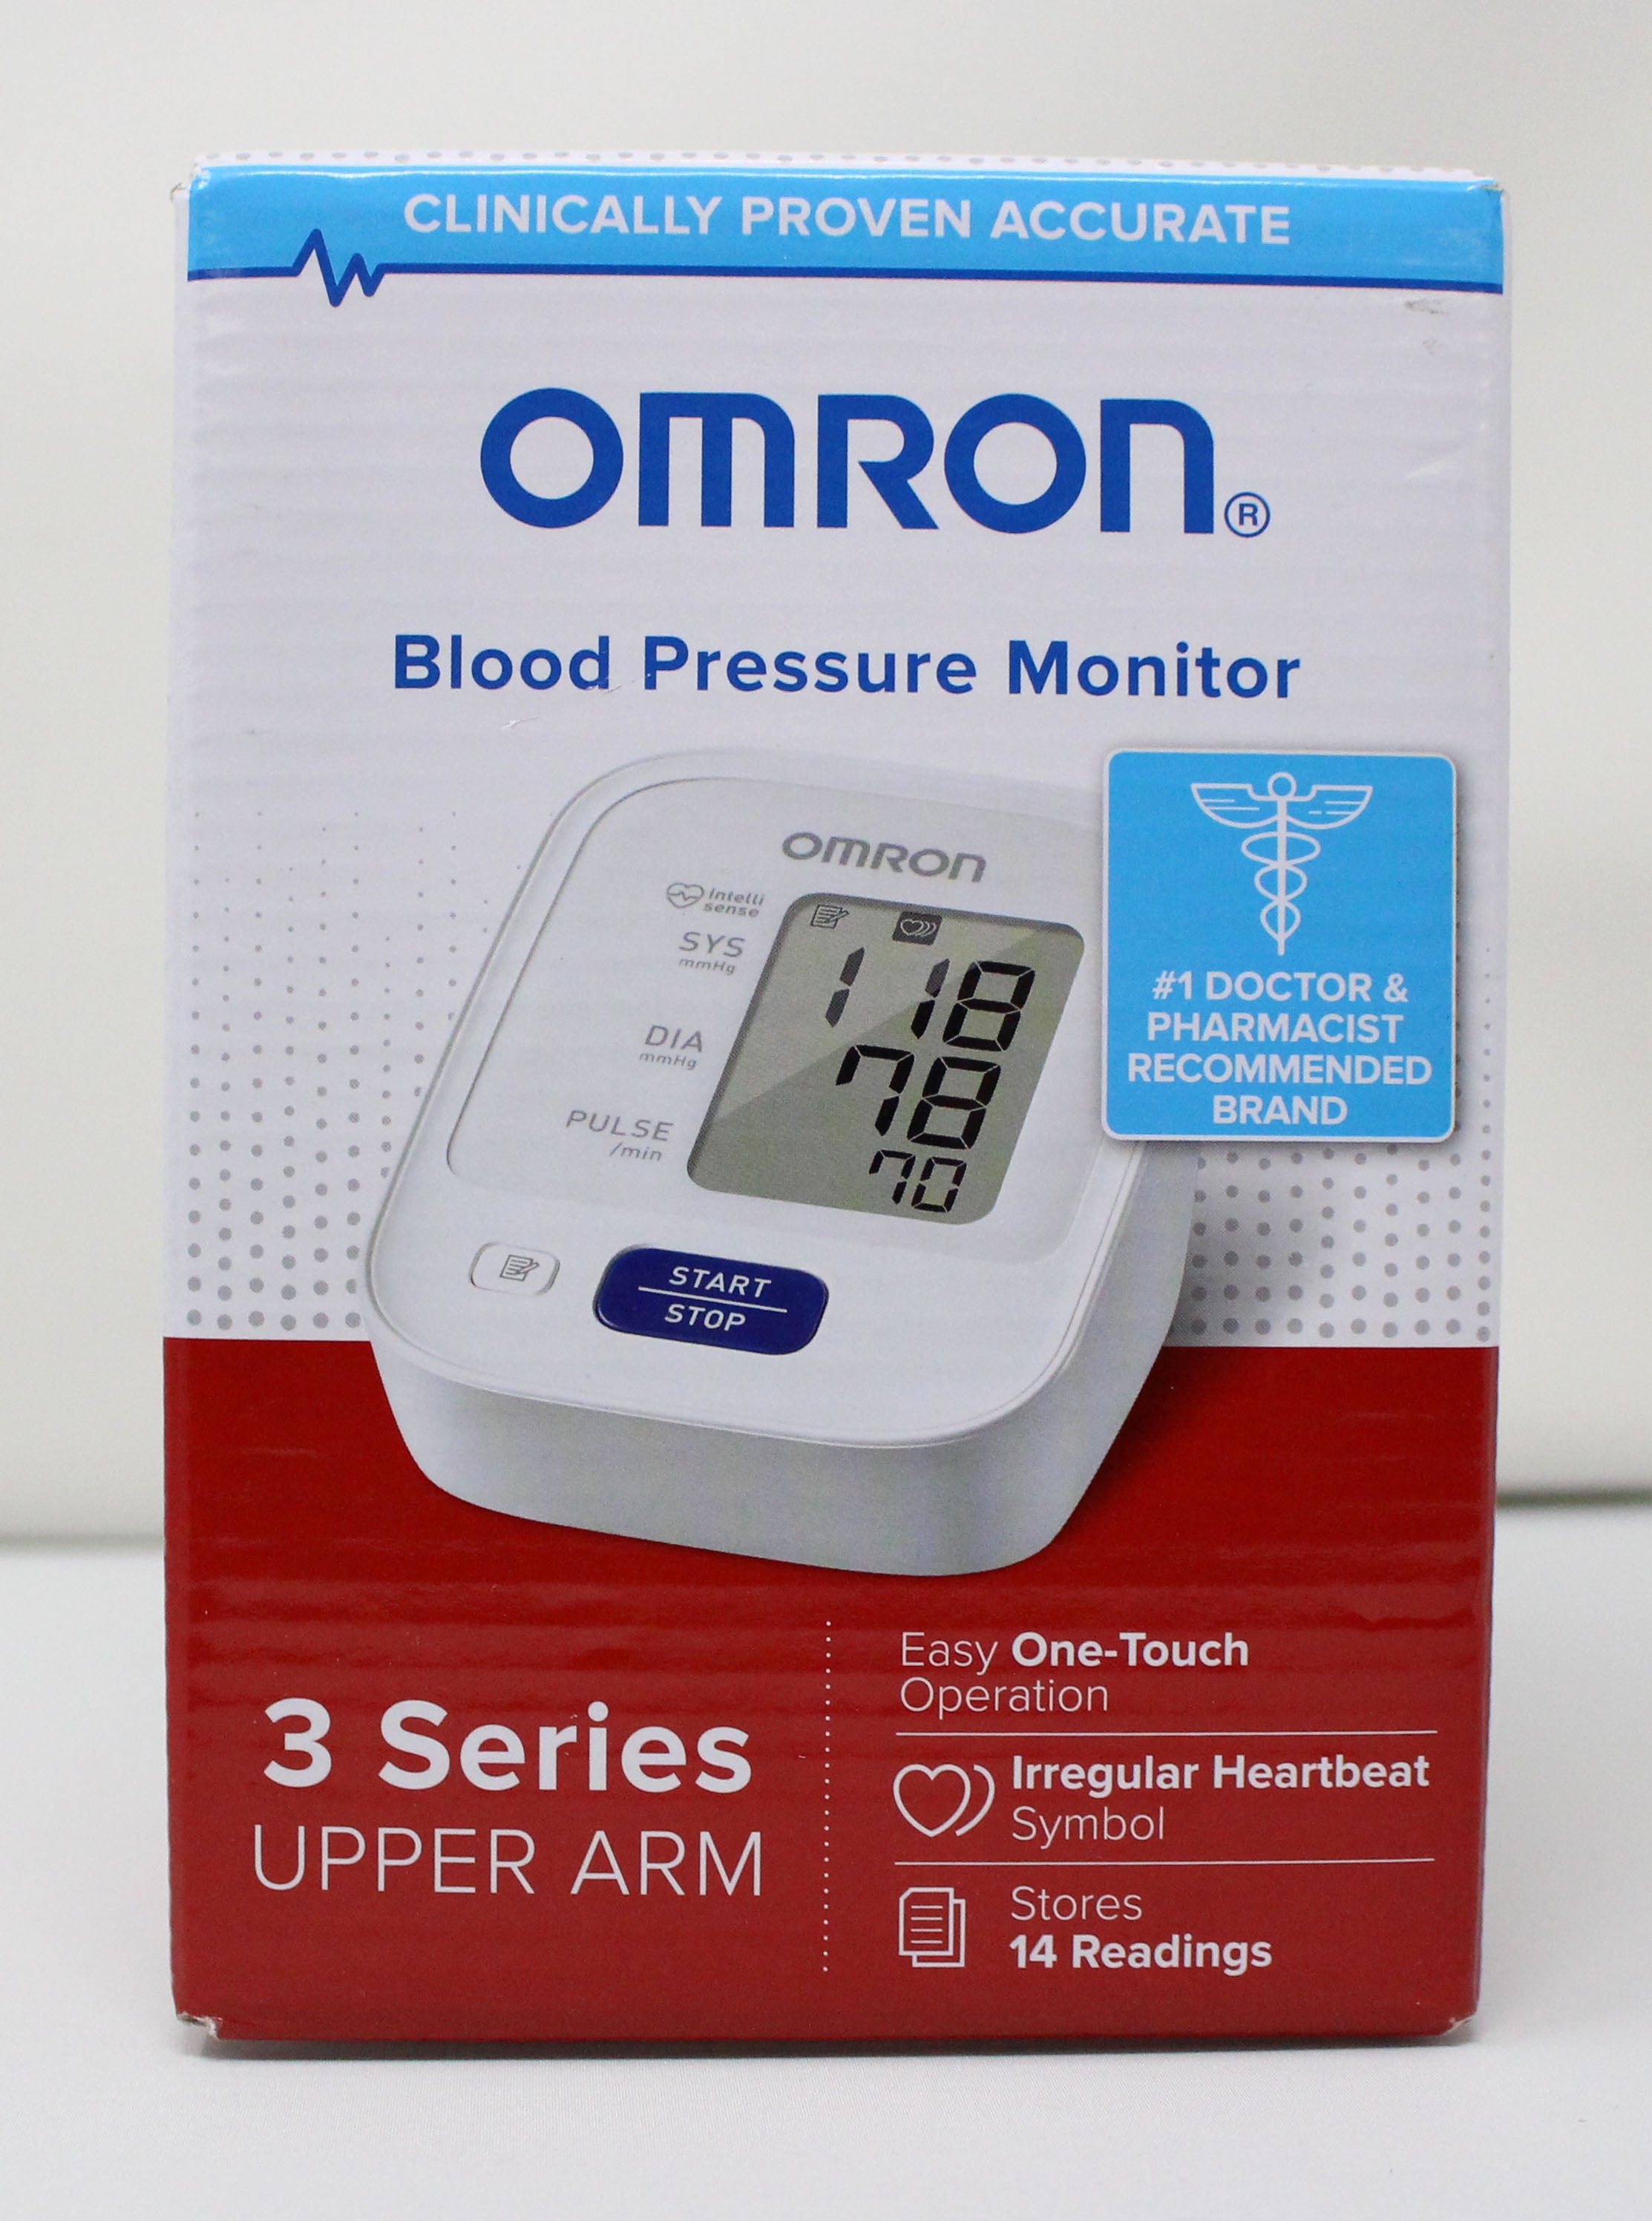 Omron 3 Series Automatic BP Monitor